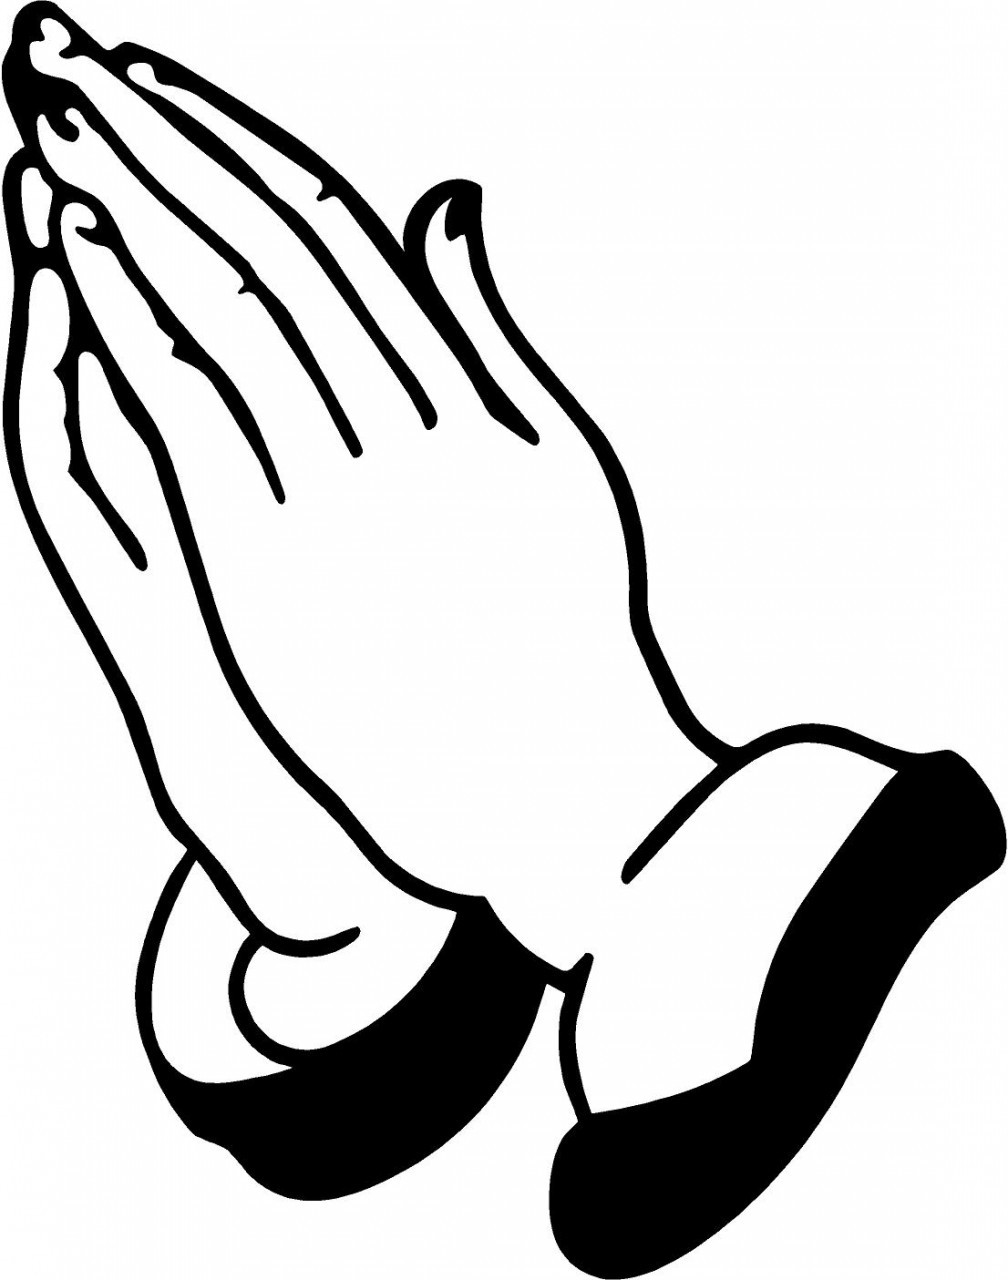 Praying hands vector clipart